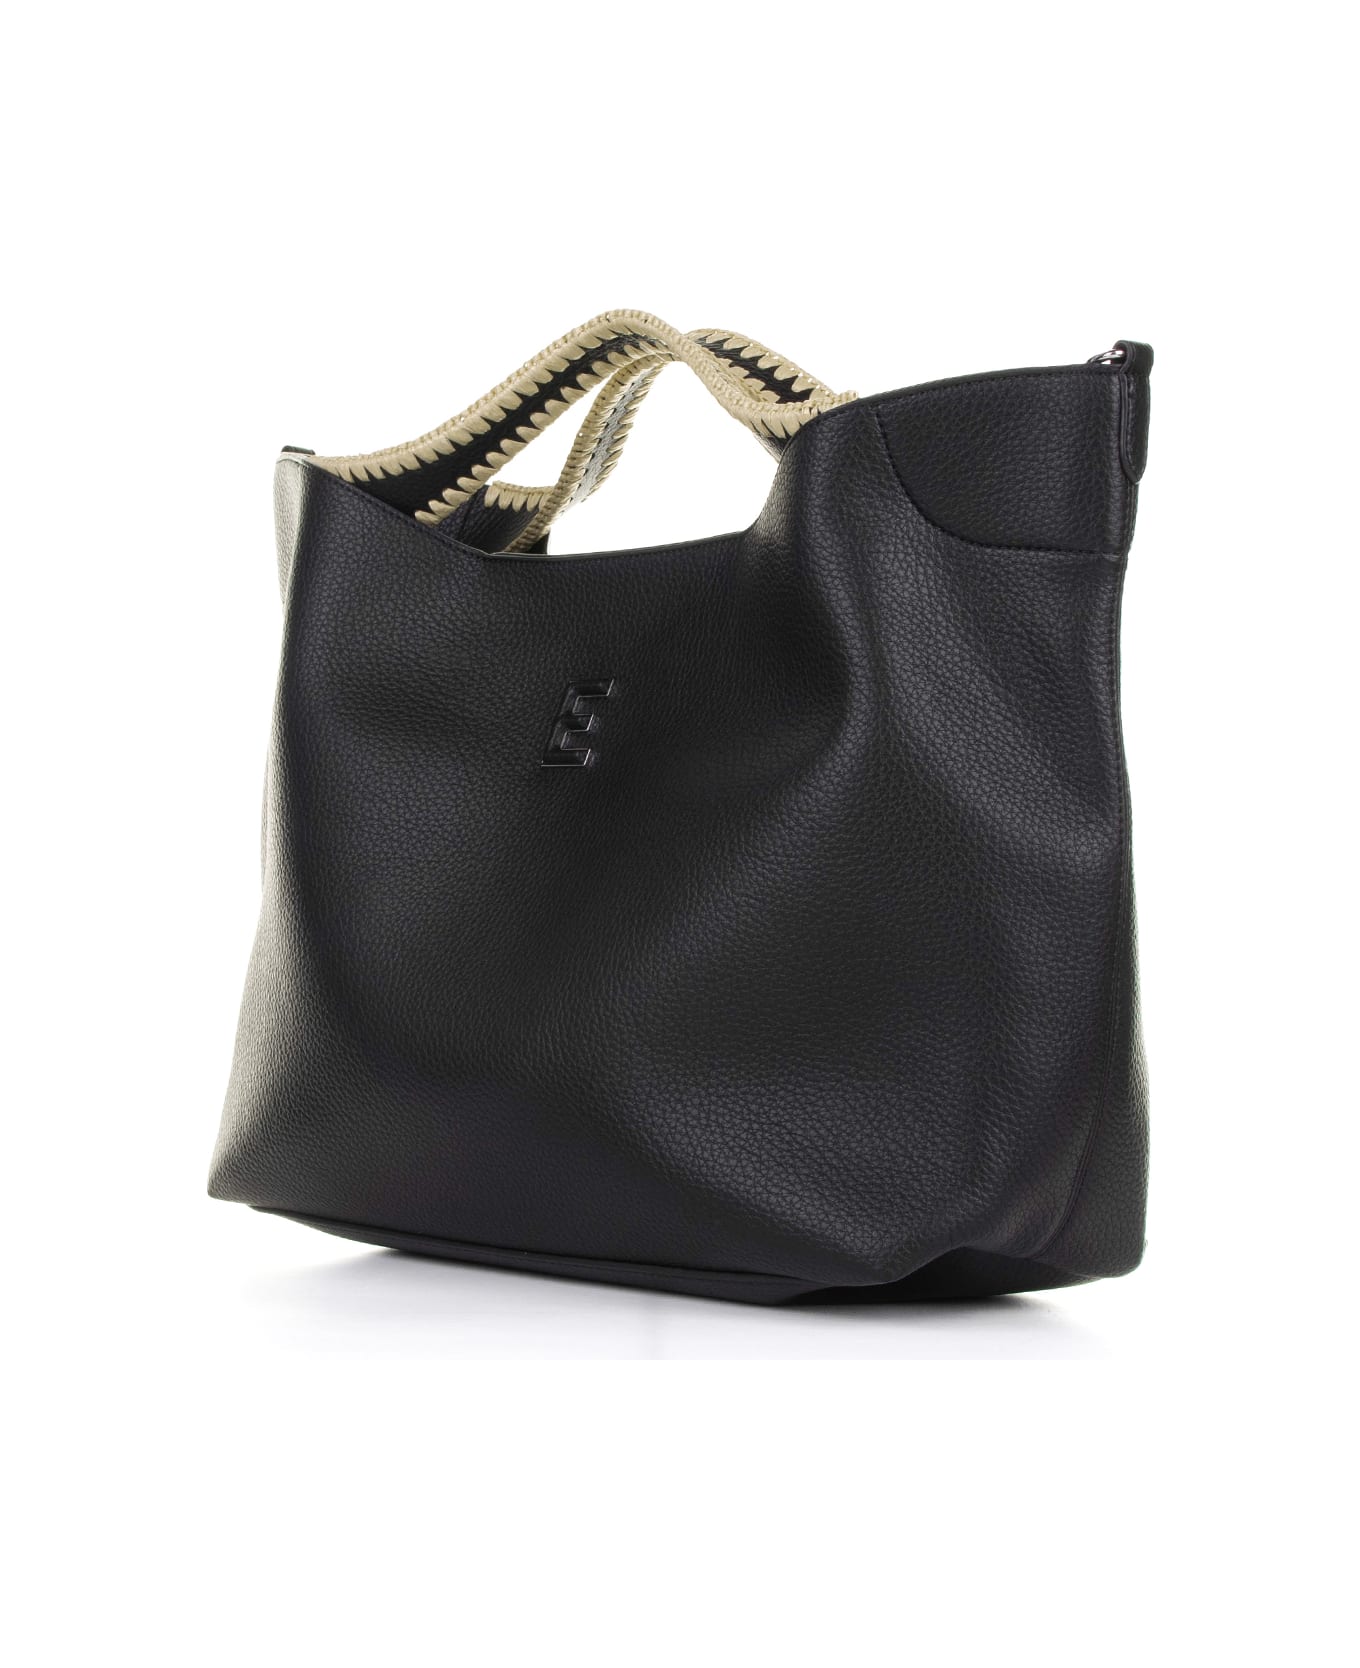 Ermanno Scervino Rachele Large Black Leather Handbag - NERO